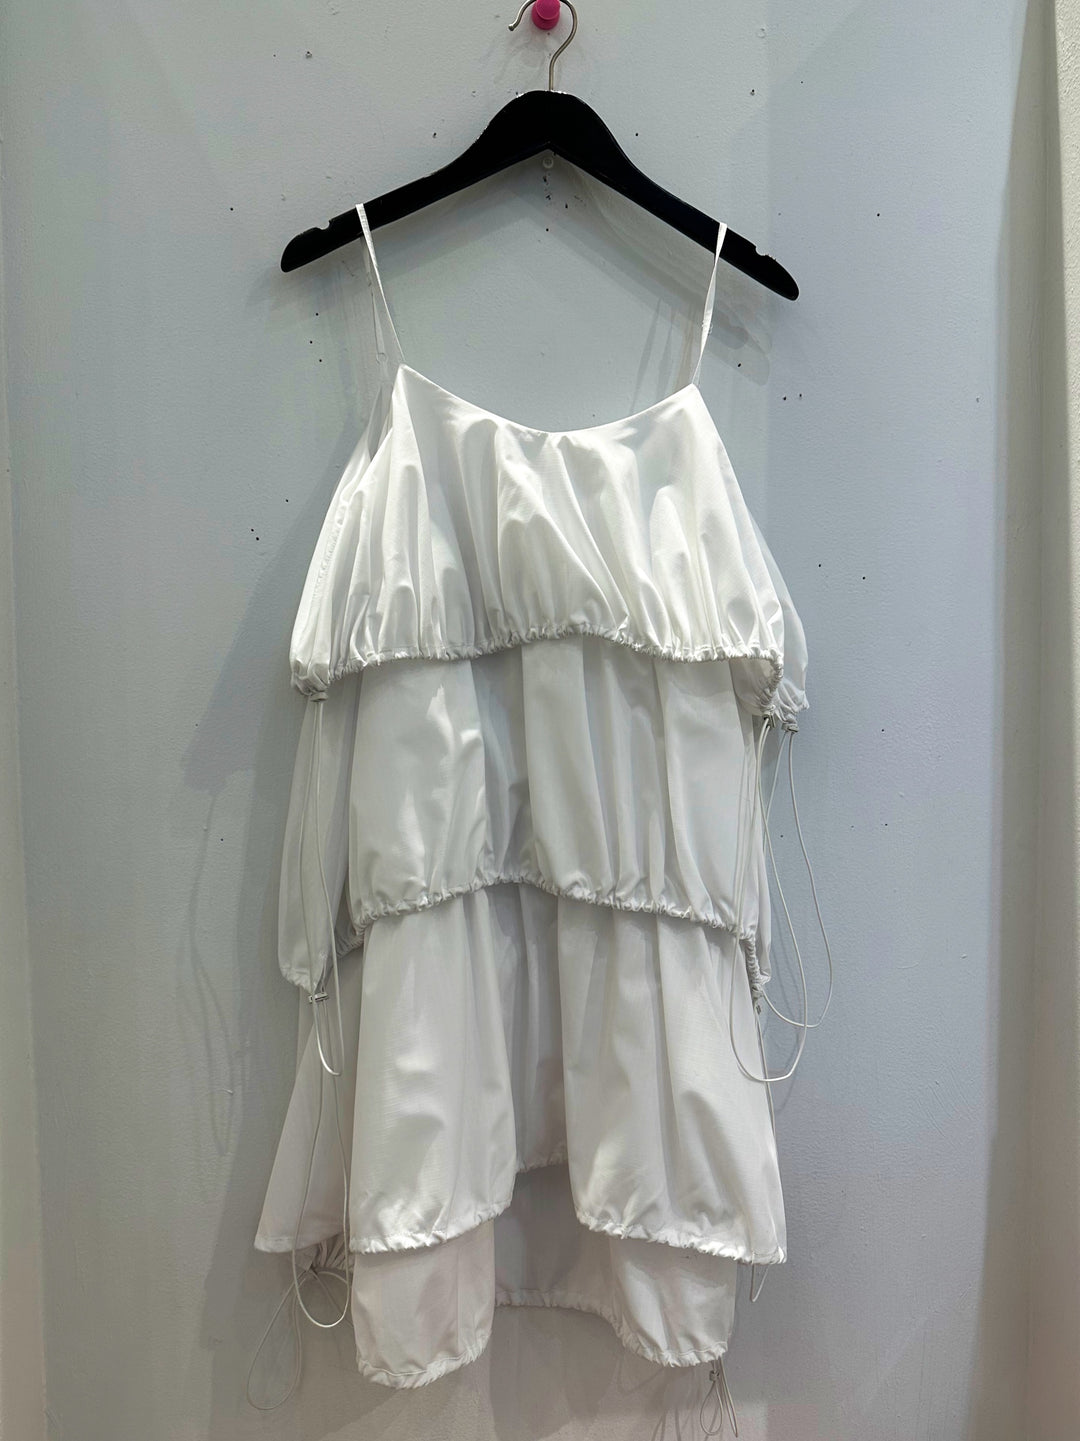 3NYCONCEPT.COM - BESFXXK WHITE DRESS